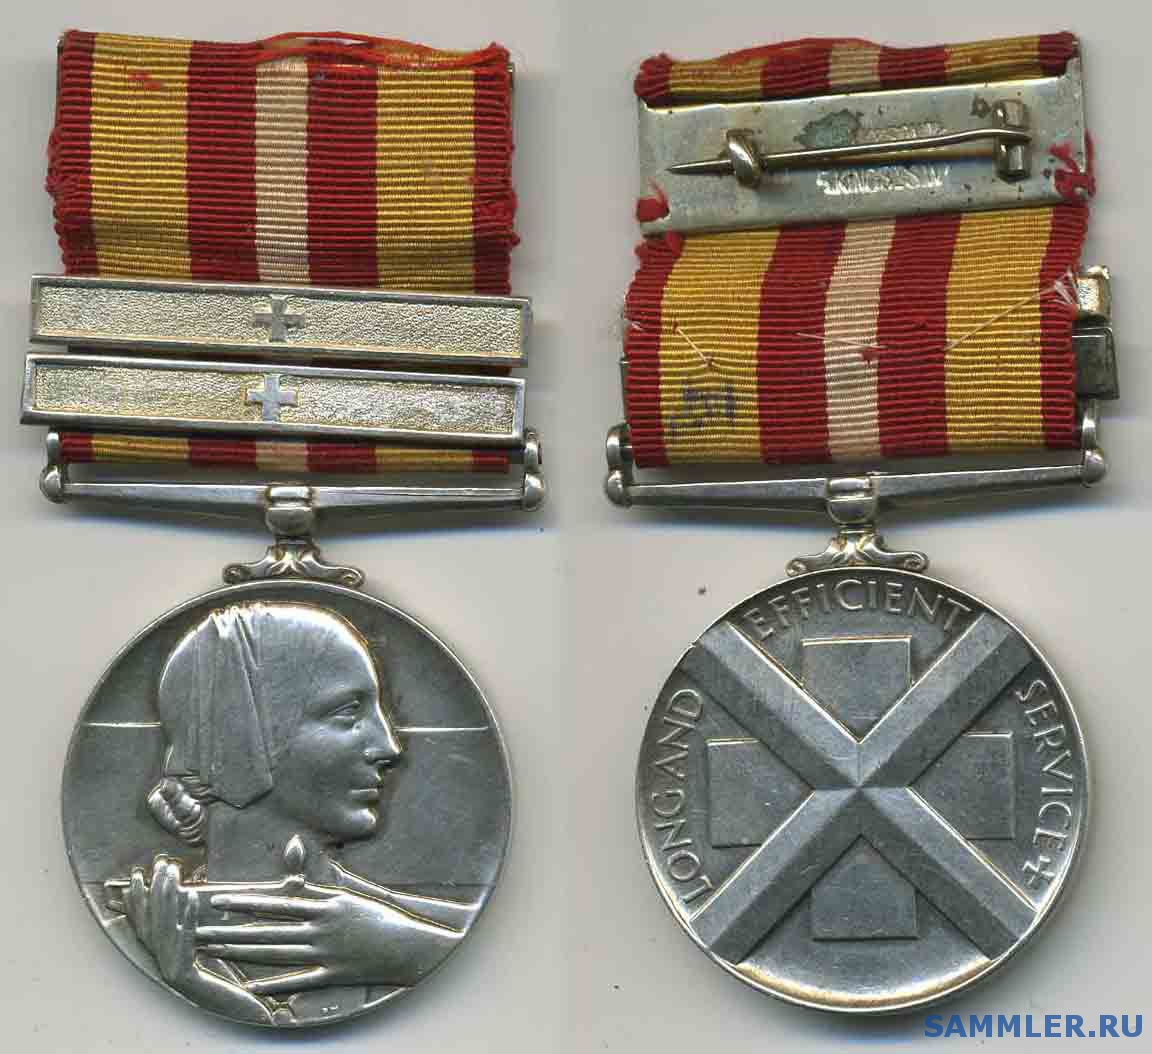 Voluntary_Medical_Service_Medal.jpg